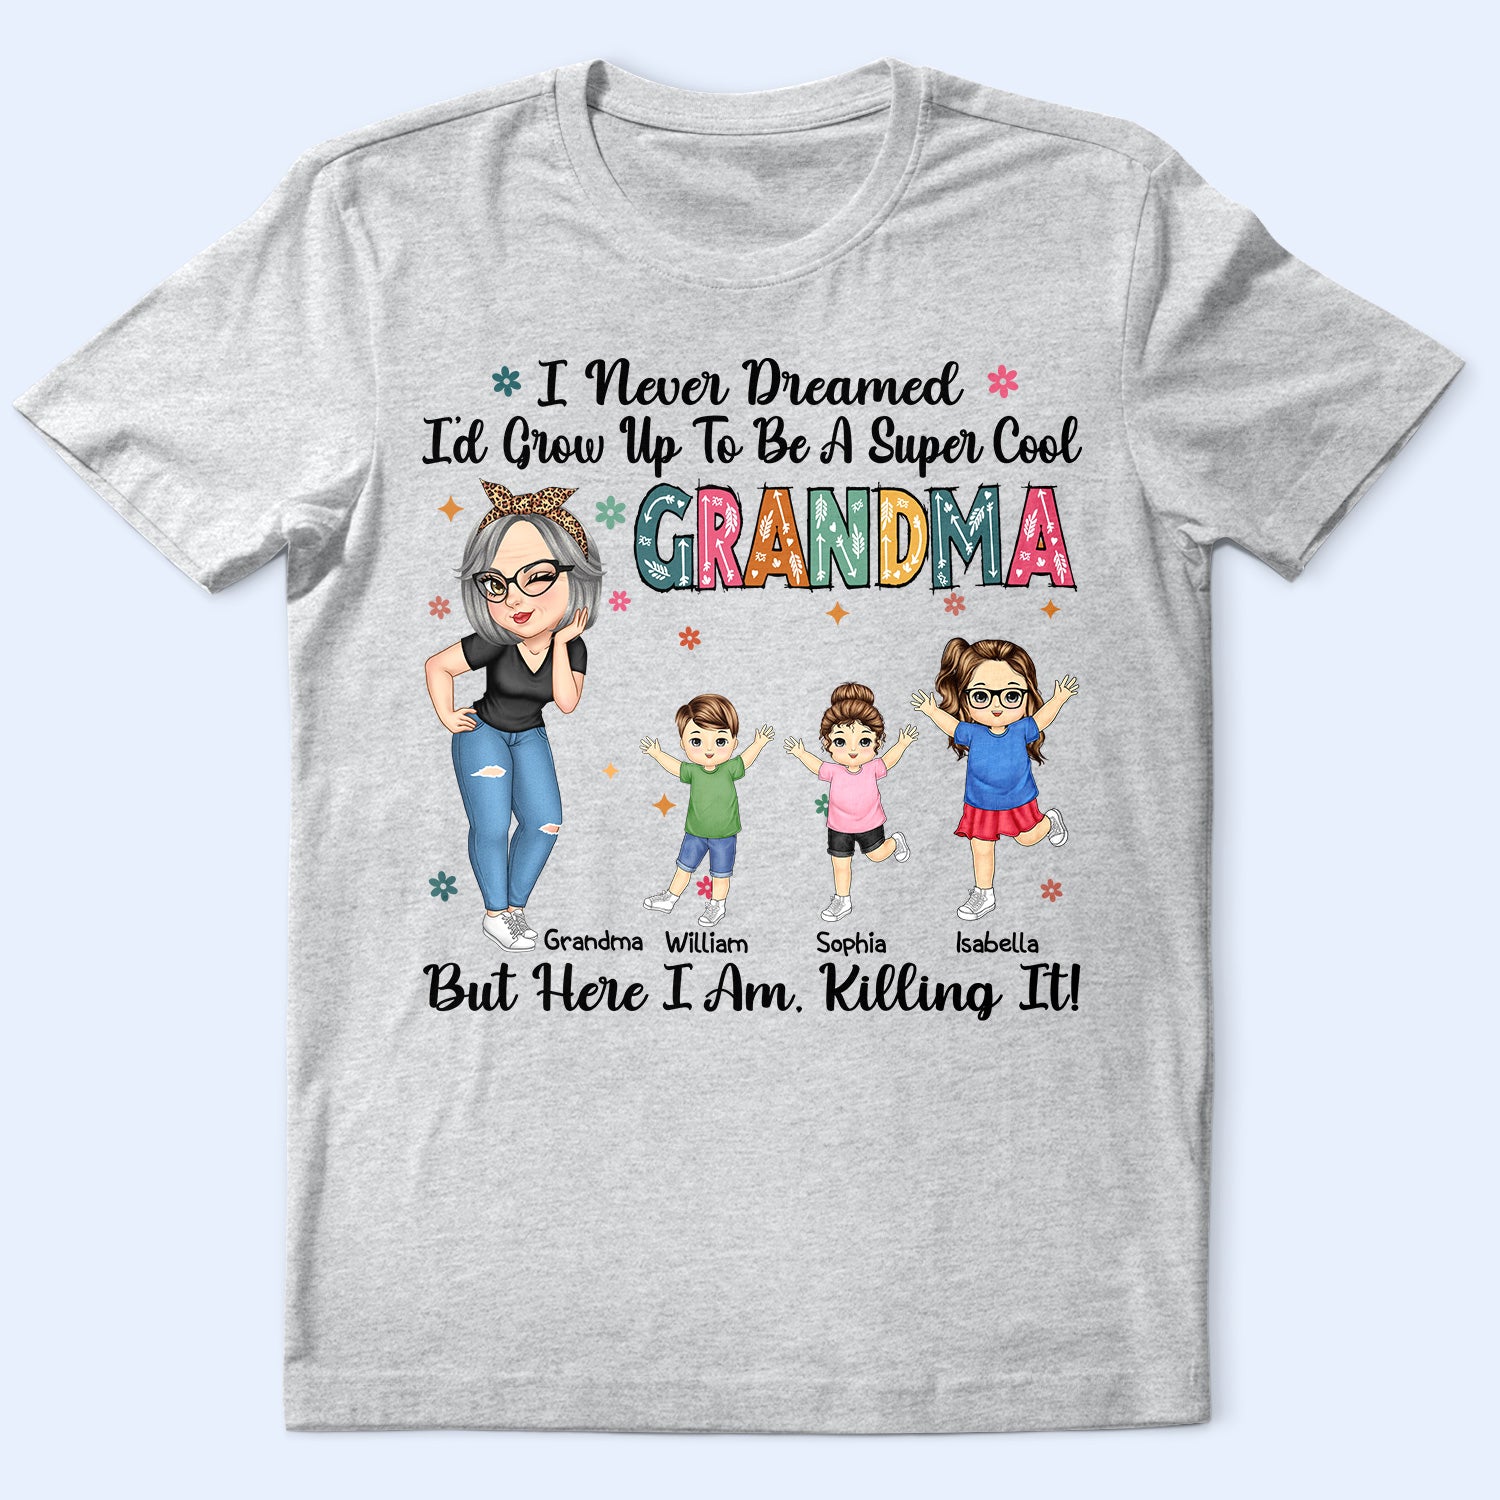 Grow Up To Be A Super Cool Grandma - Funny Gift For Grandma, Mom, Nana, Gigi - Personalized T Shirt